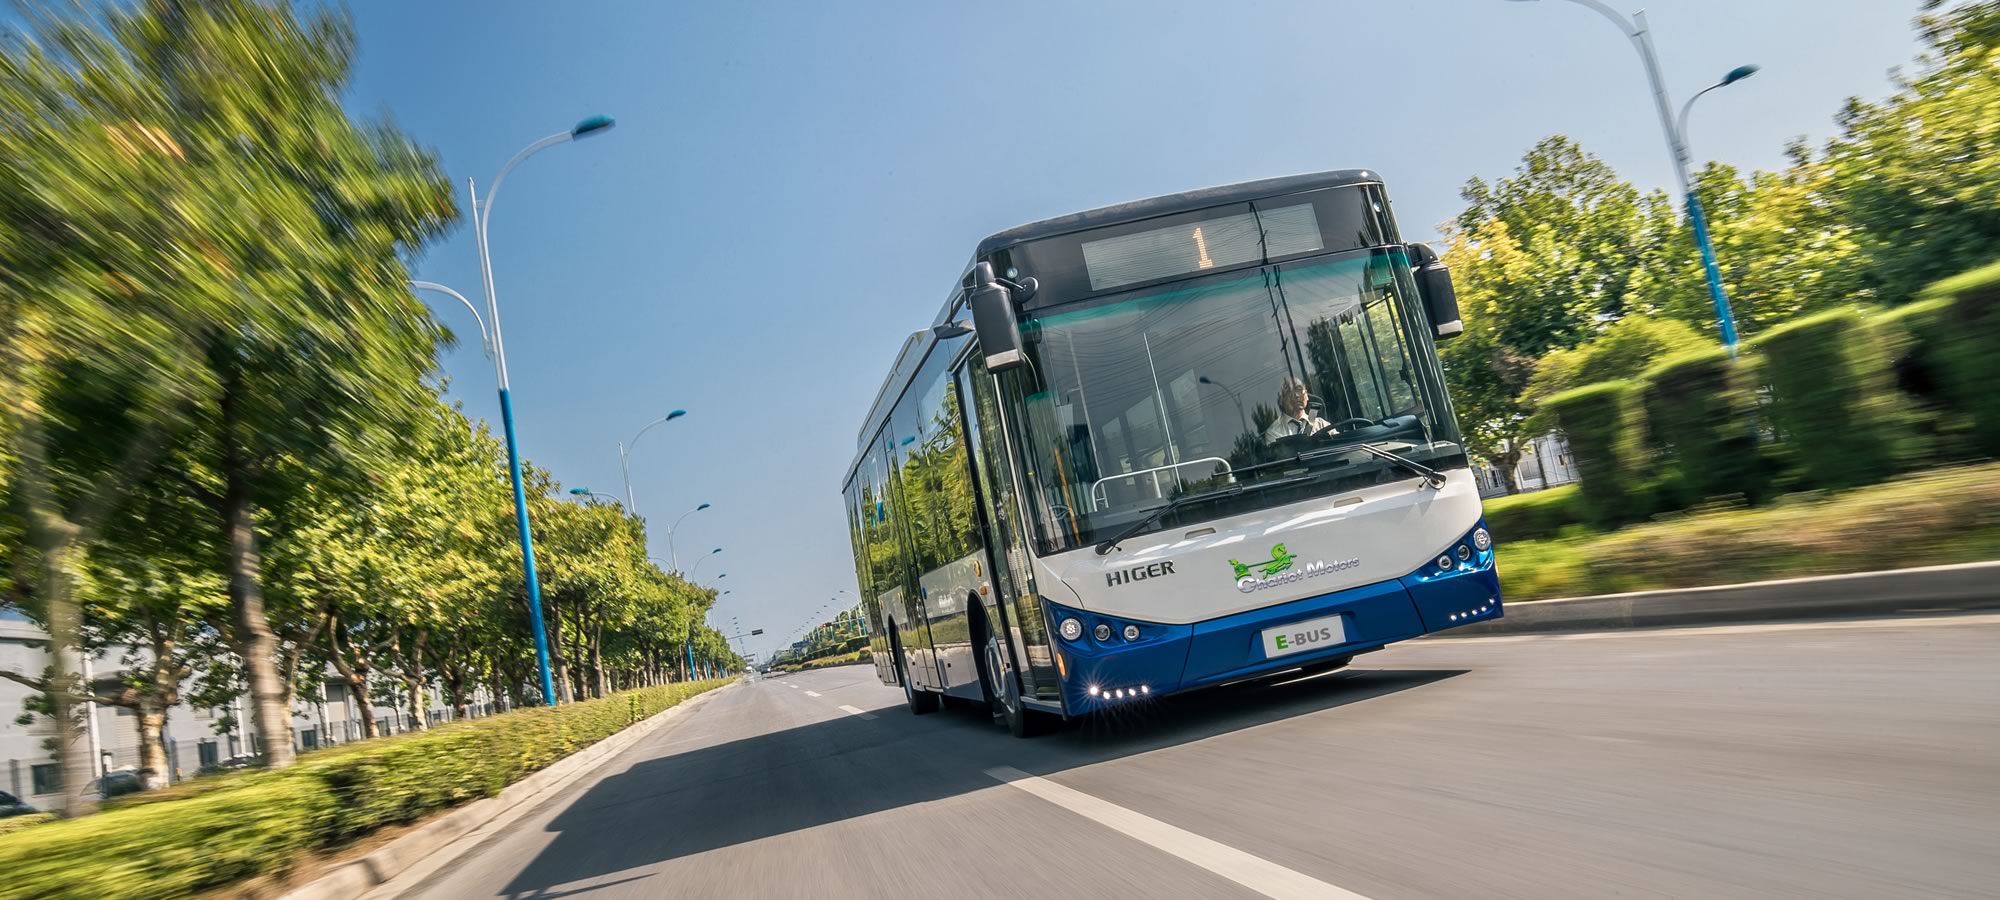 Chariot zero emissions electric bus